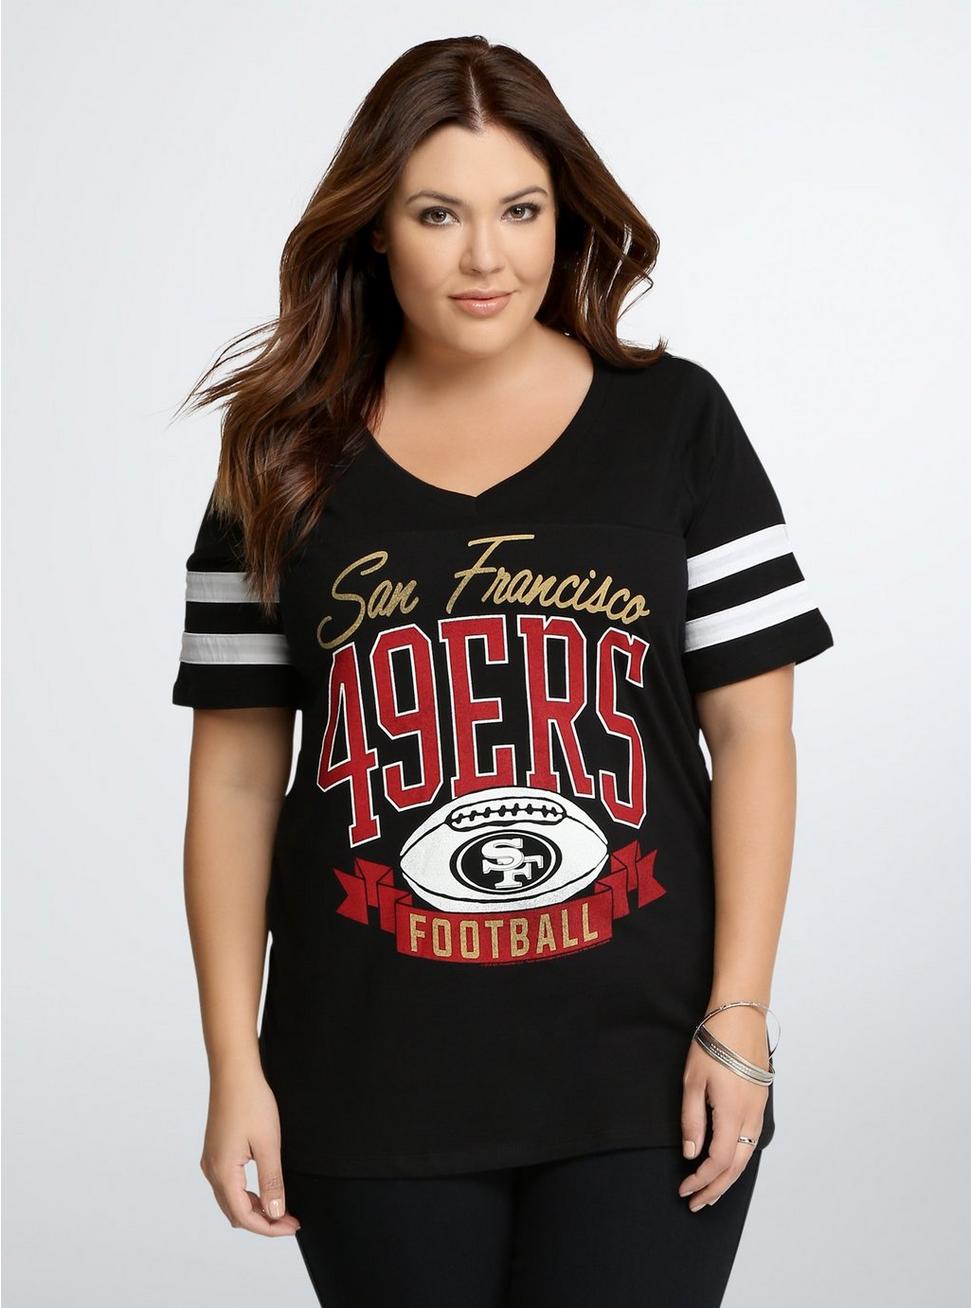 49ers plus size women's apparel